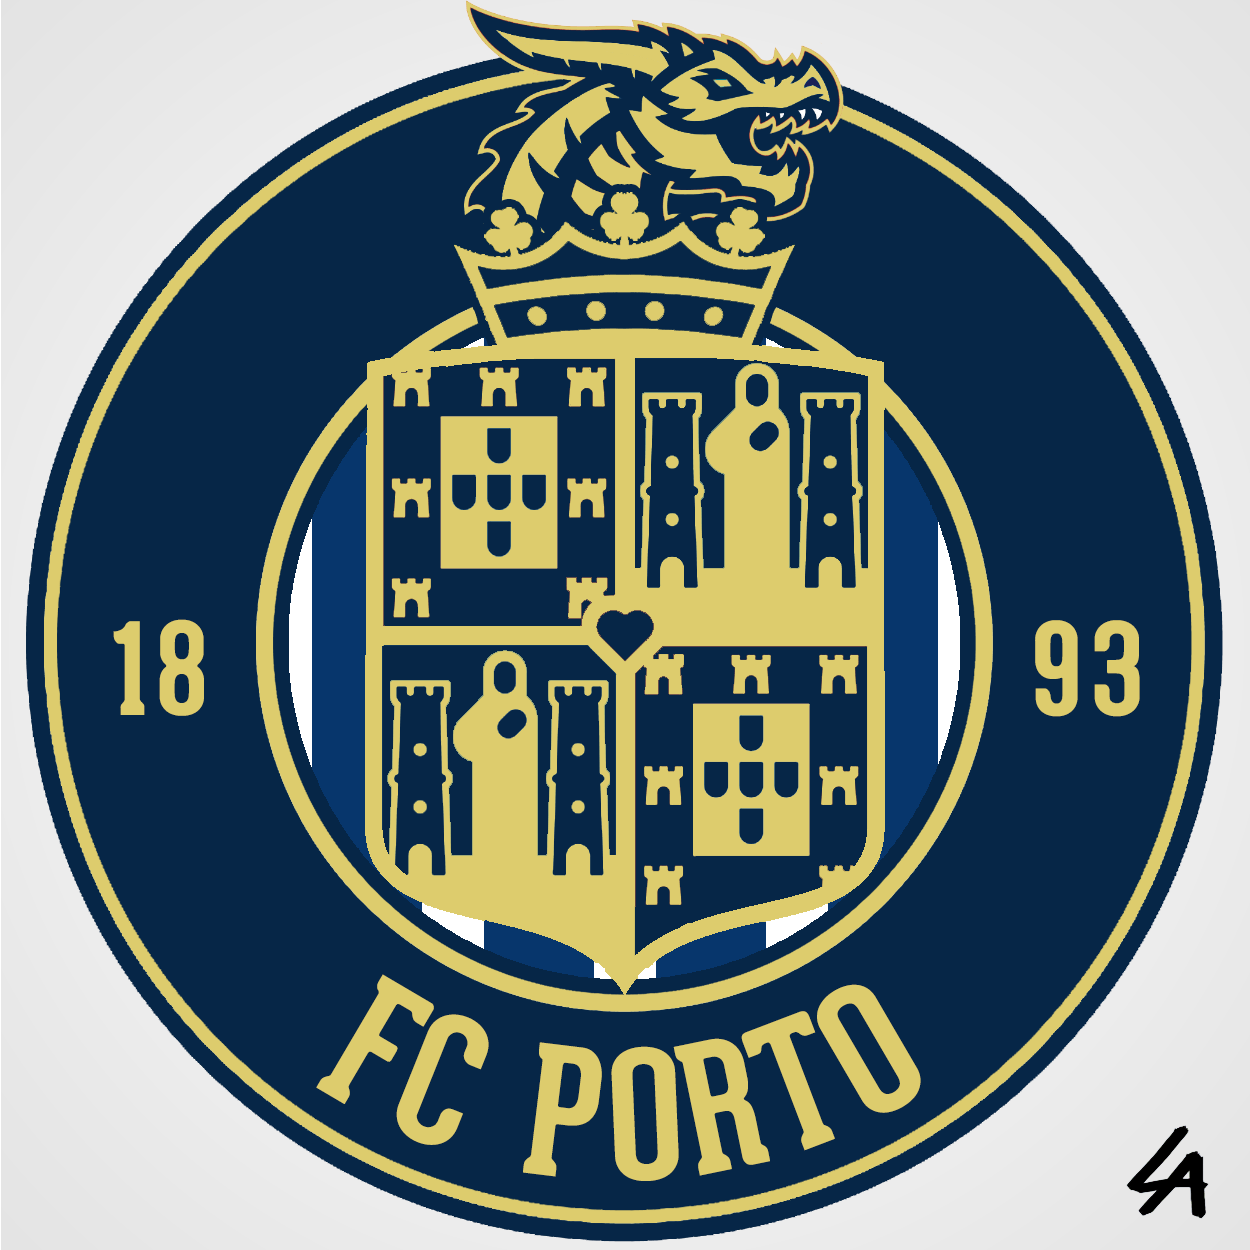 Fc porto. Эмблема футбольного клуба порту. FC Porto 1998. Логотип футбольный клуб Порто. Порт логотип.